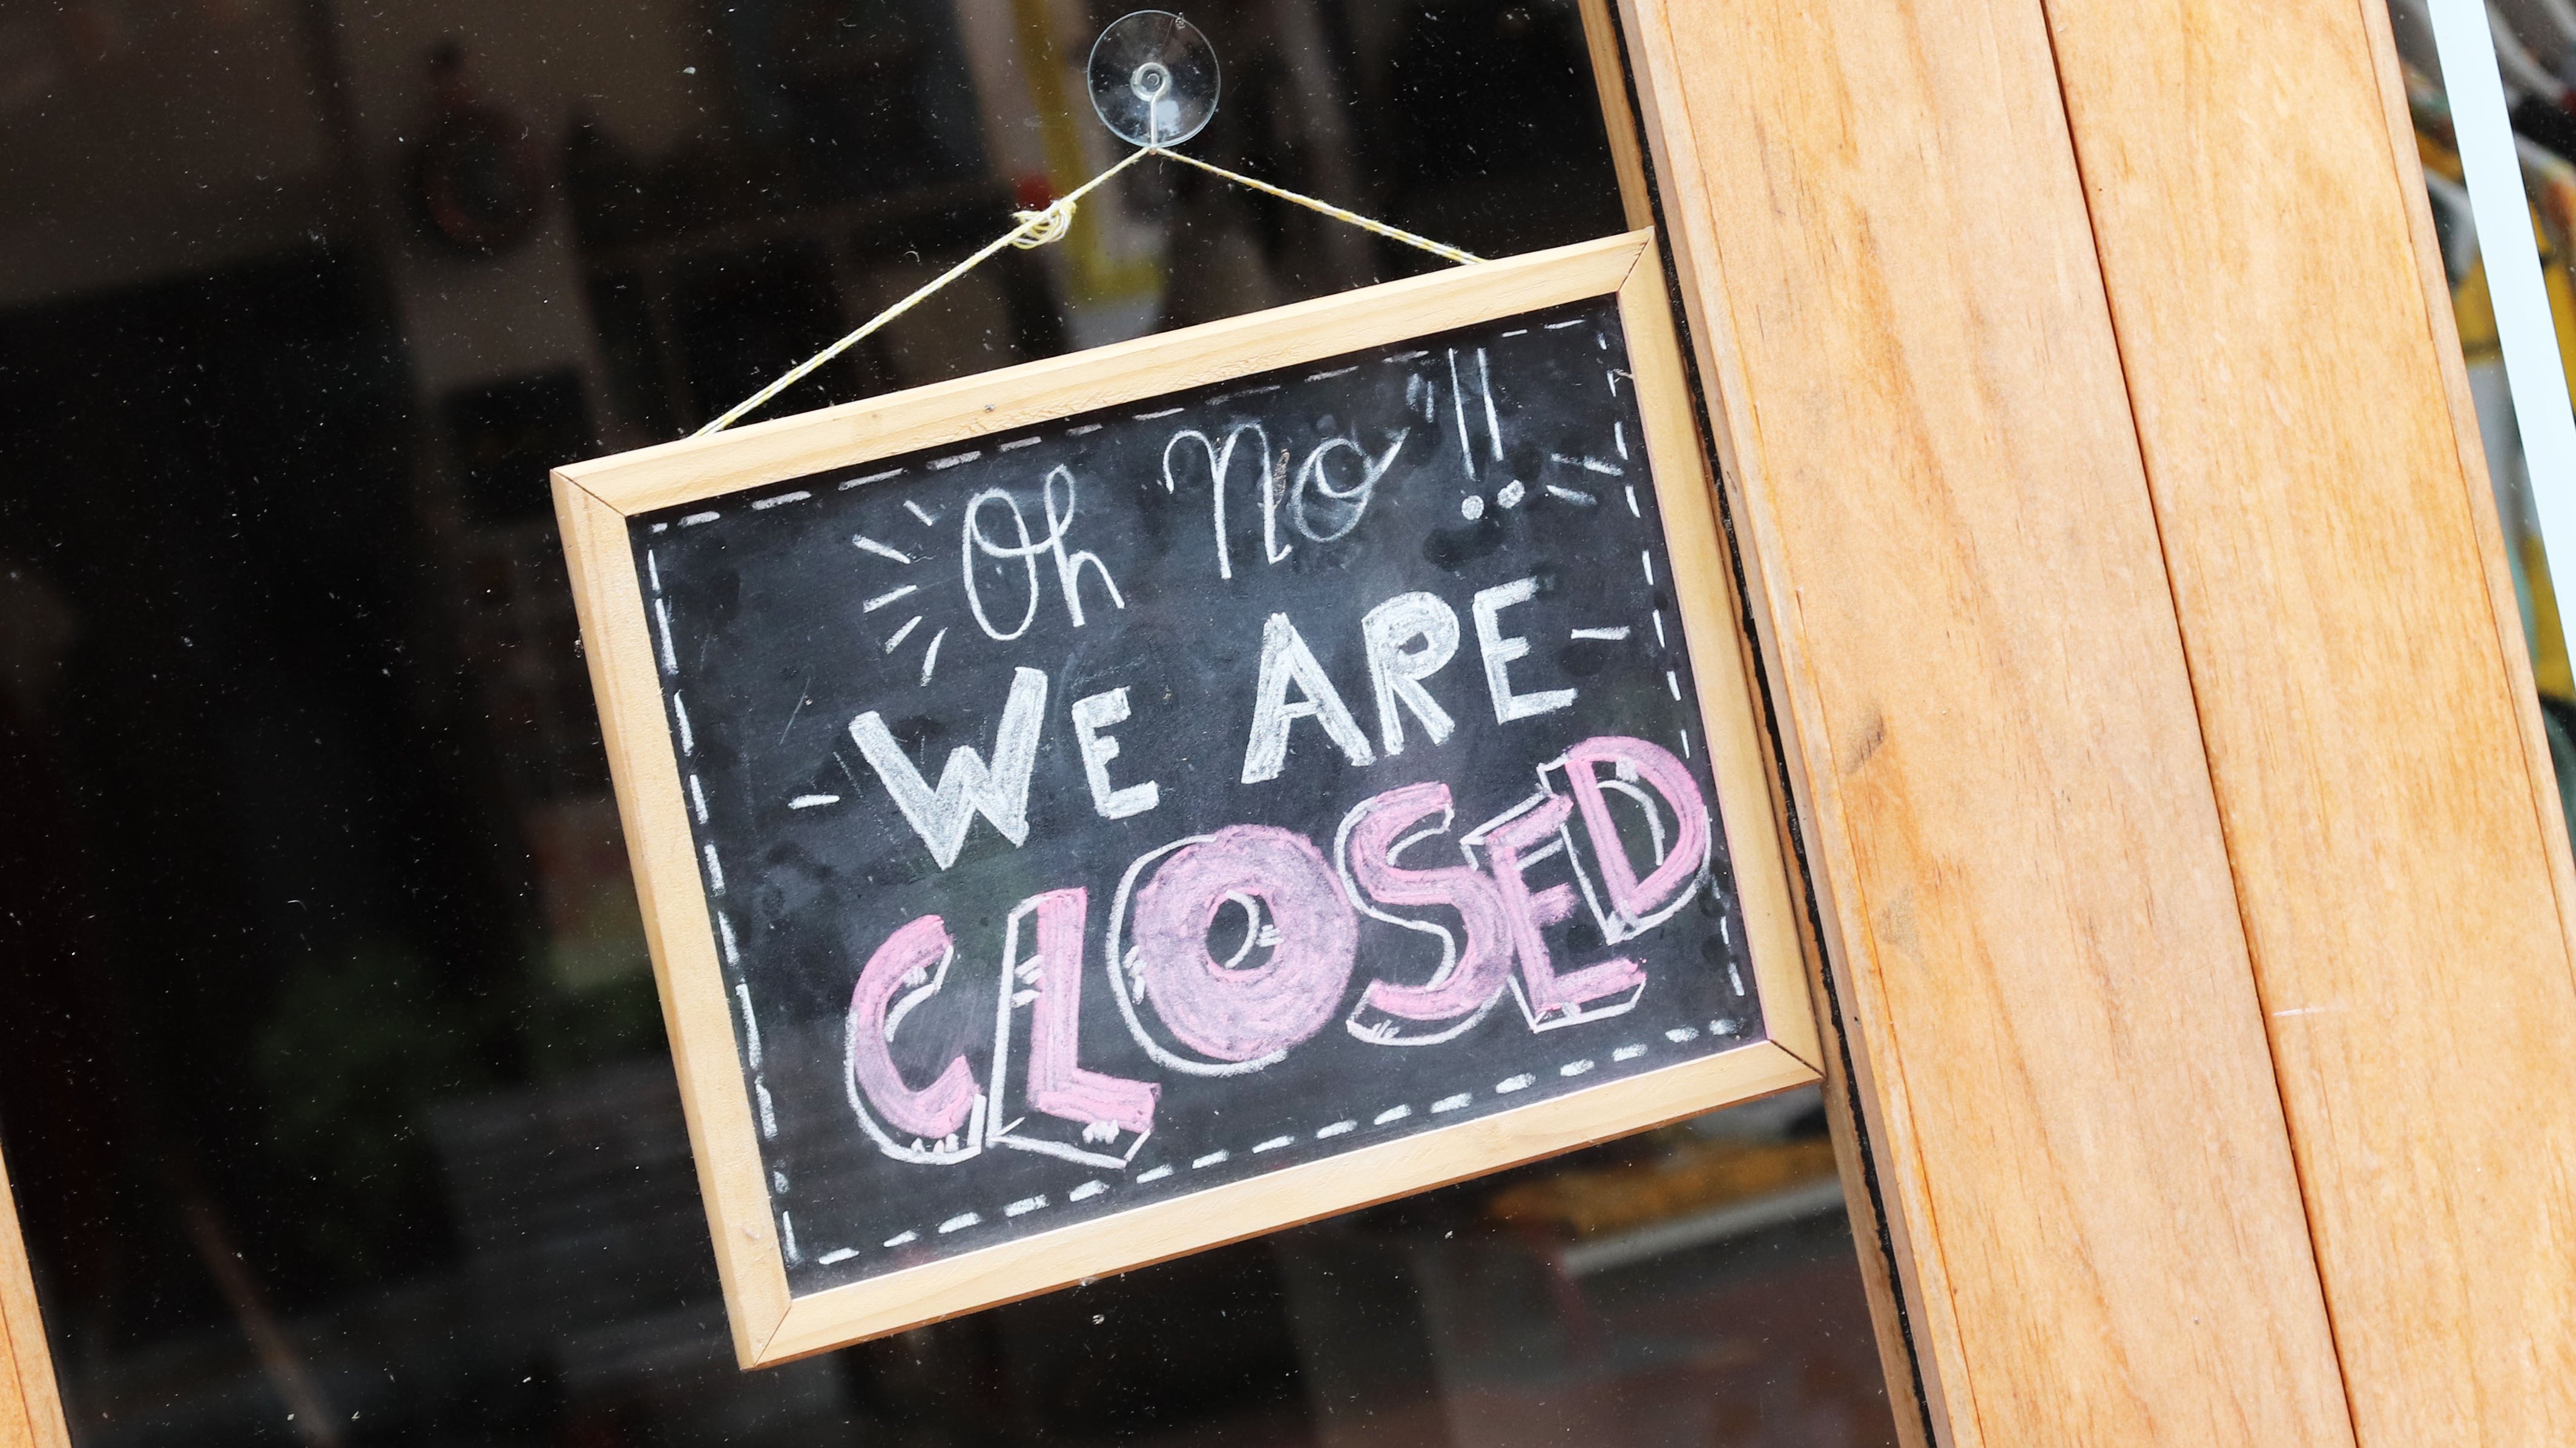 Closed Restaurant During Lockdown